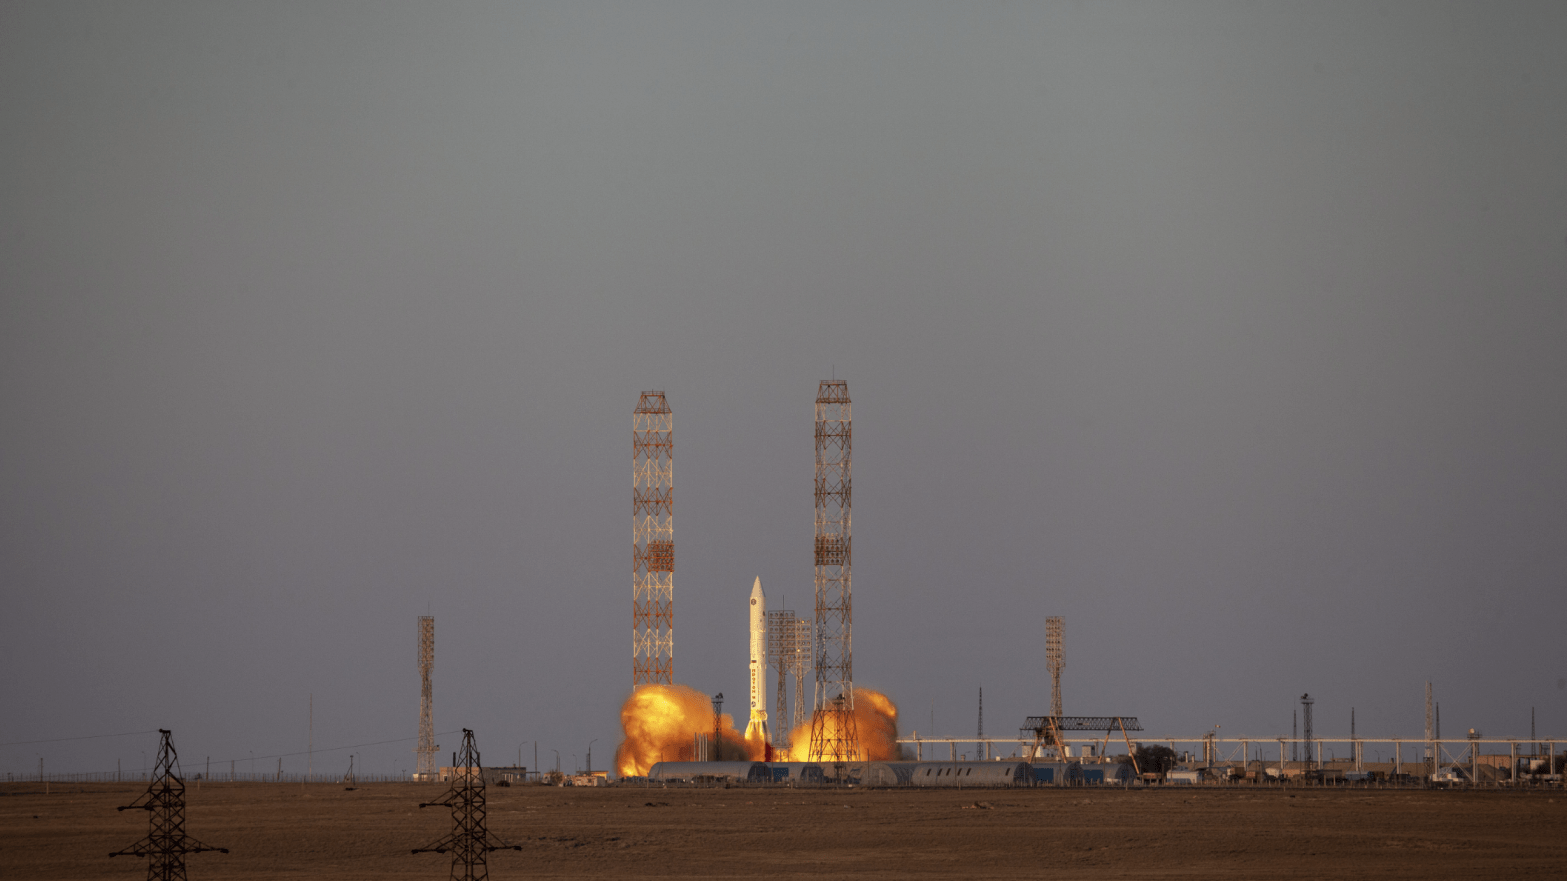 Nauka launching atop a Proton-M rocket.  (Image: Roscosmos)